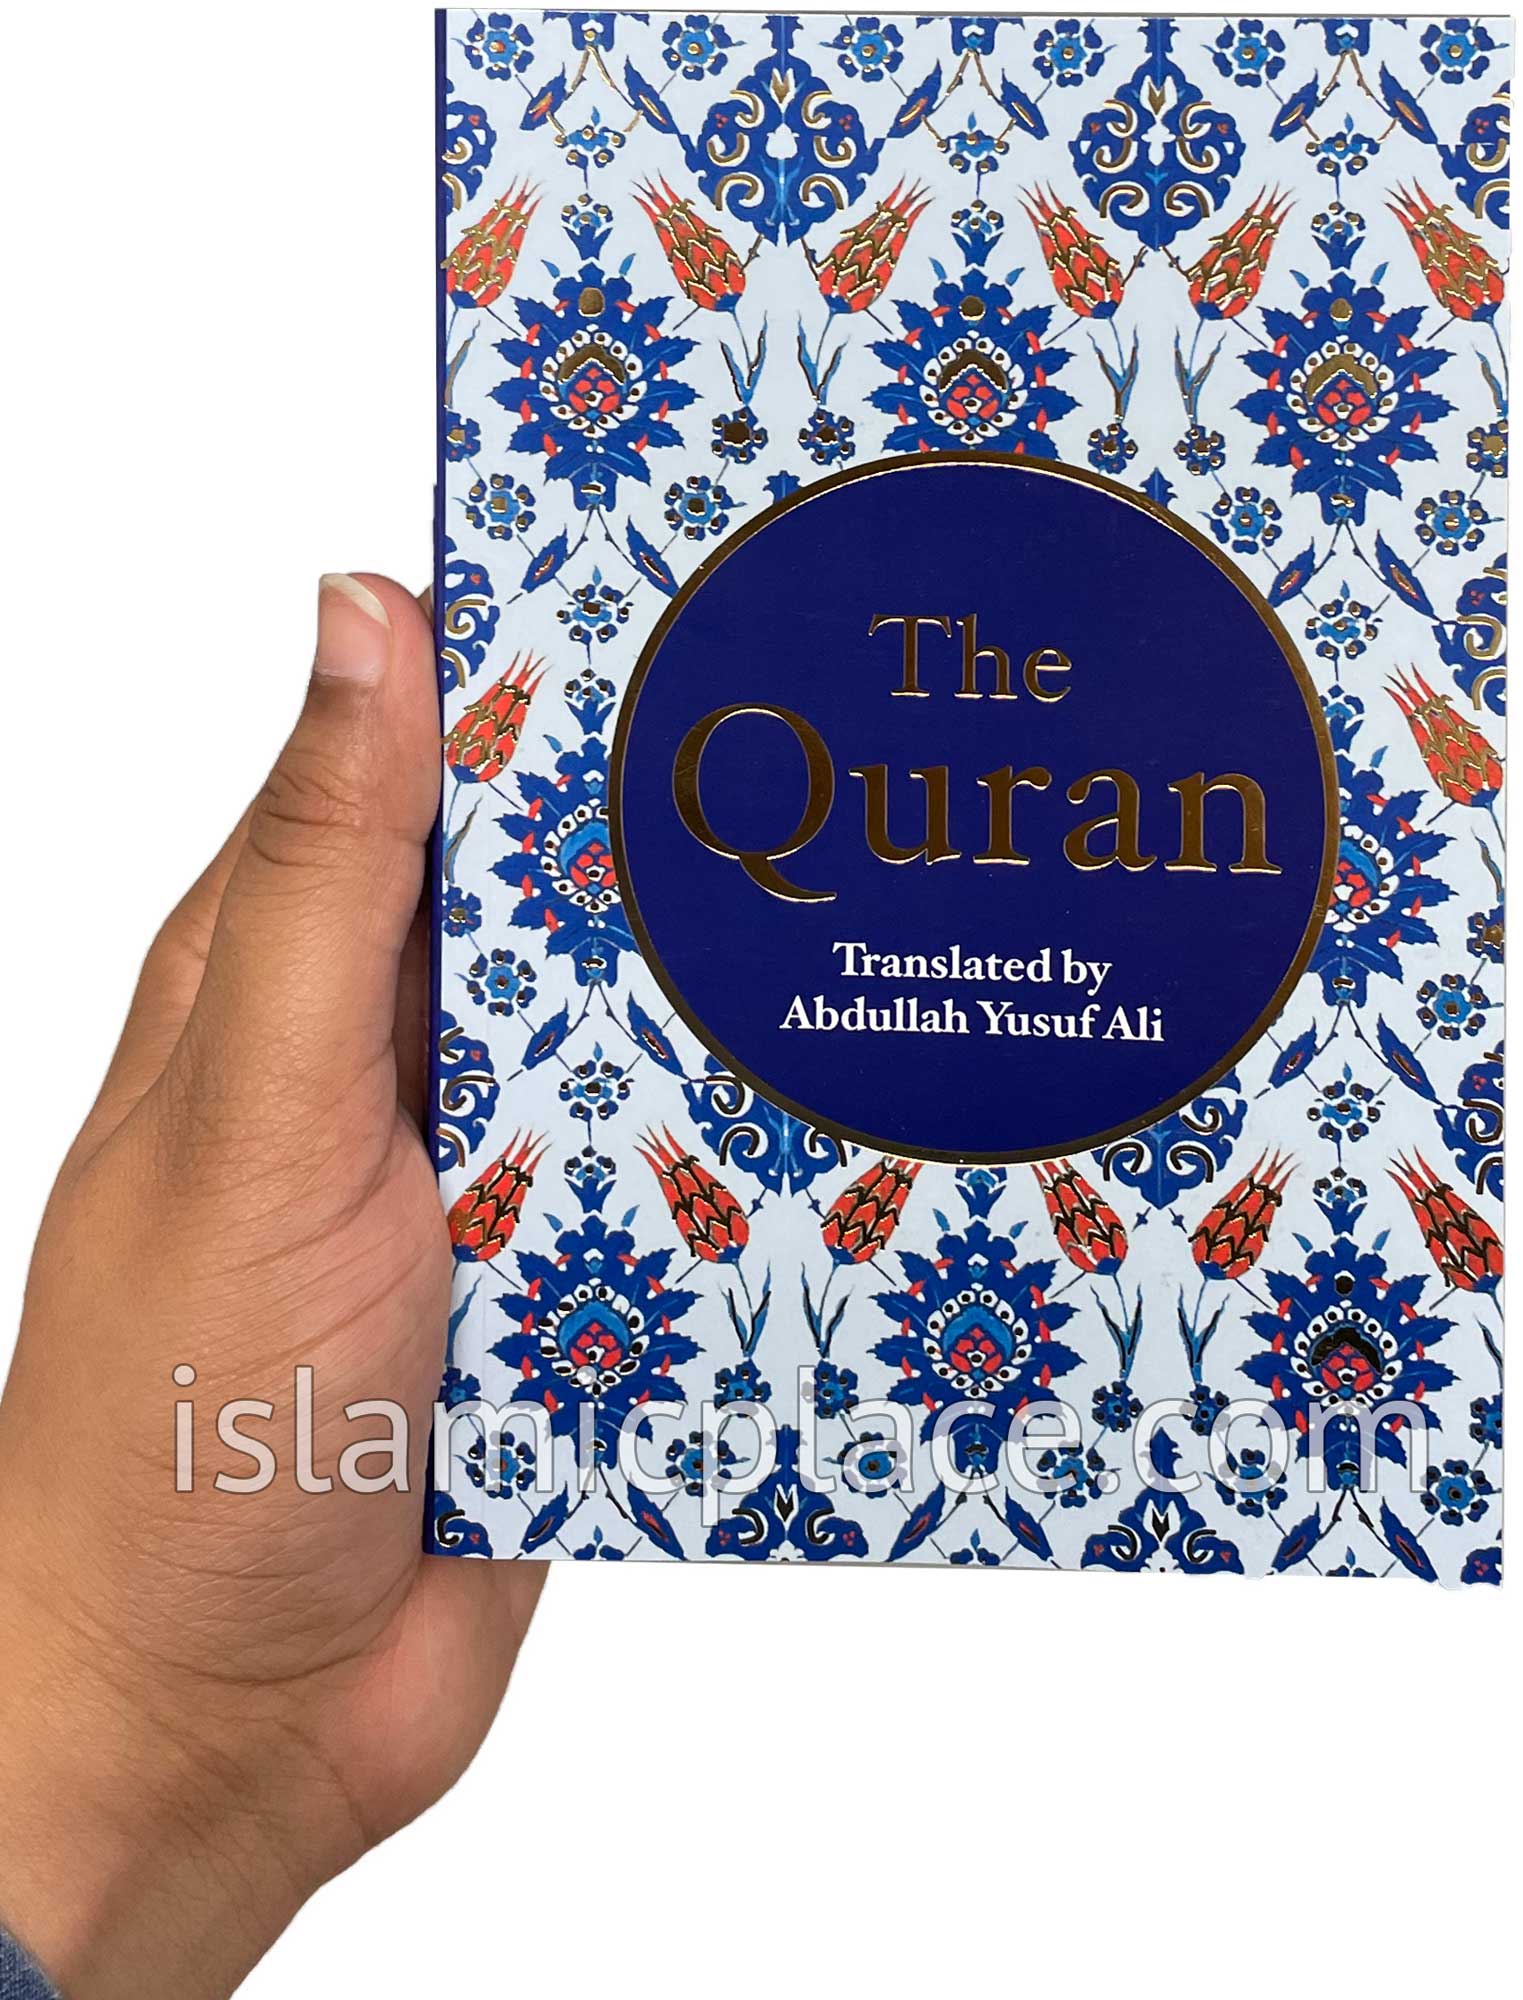 The Quran (English only, Paperback) Translation by Abdullah Yusuf Ali